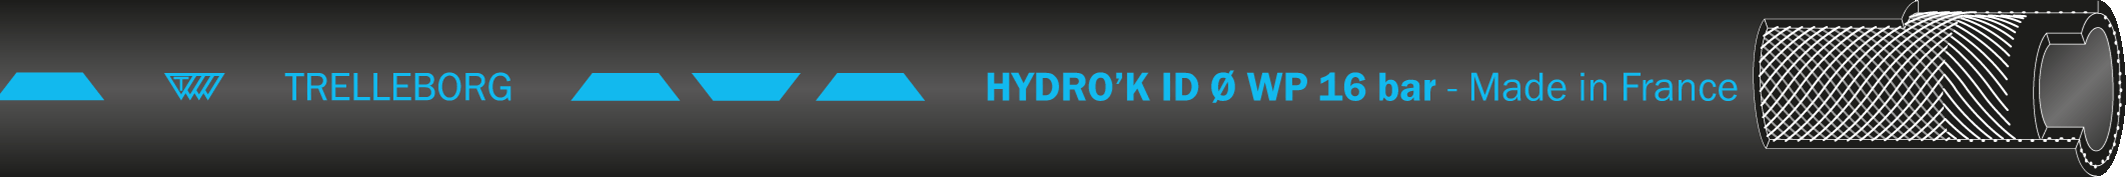 HYDROK_TSALES_300dpi_gif_180mmx15mm